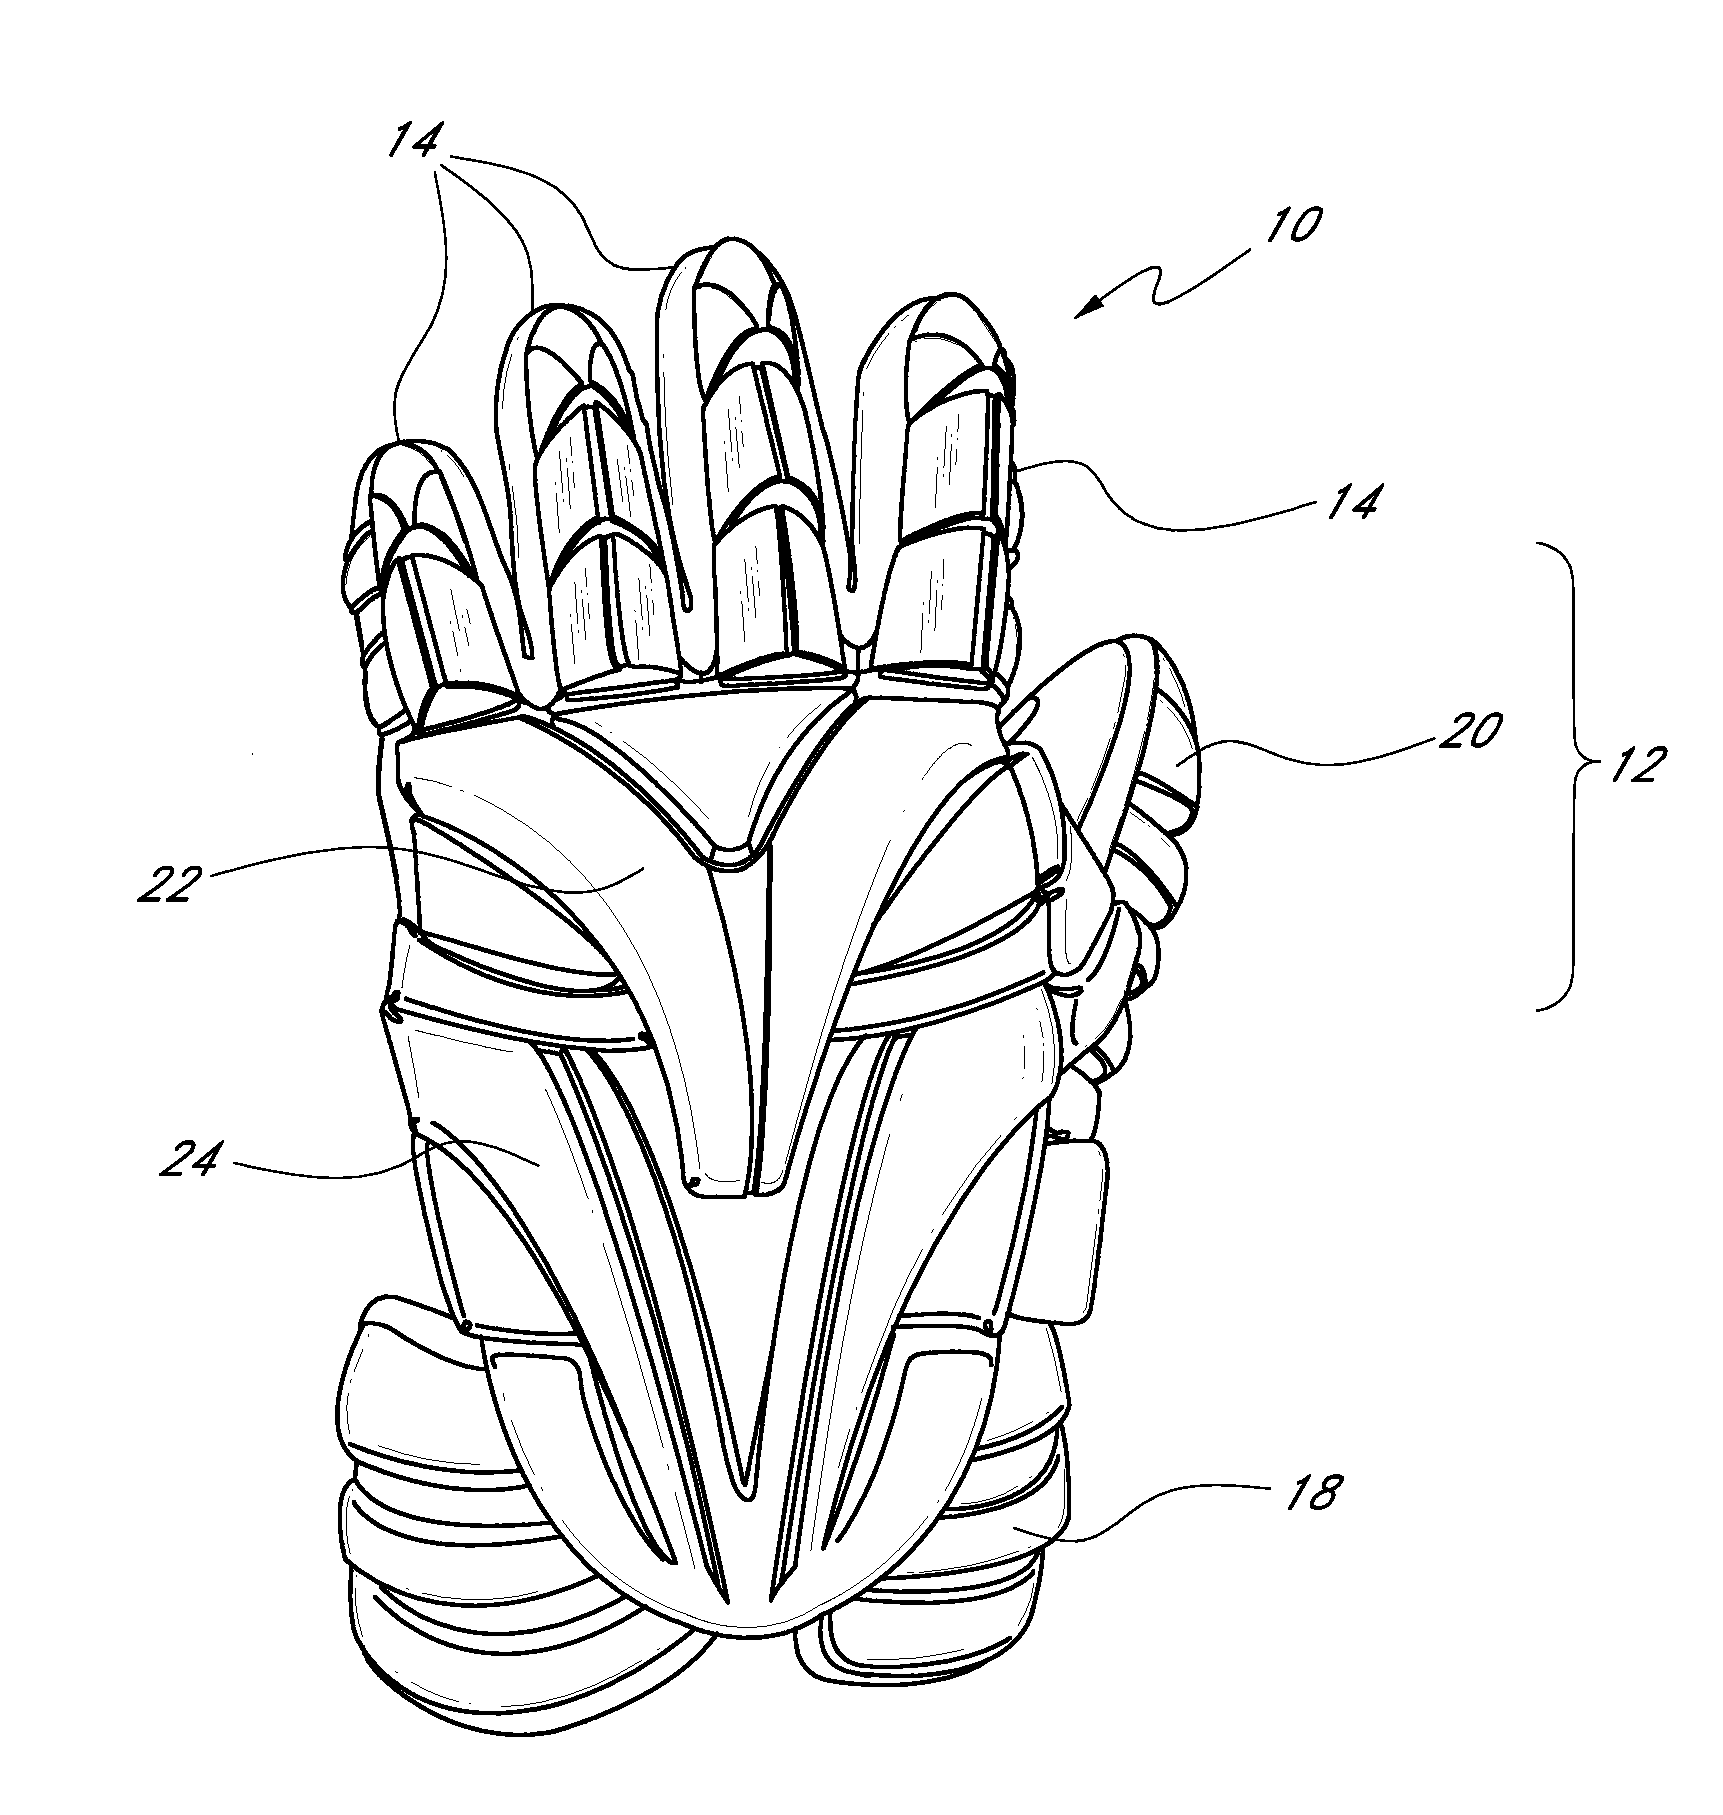 Lacrosse glove